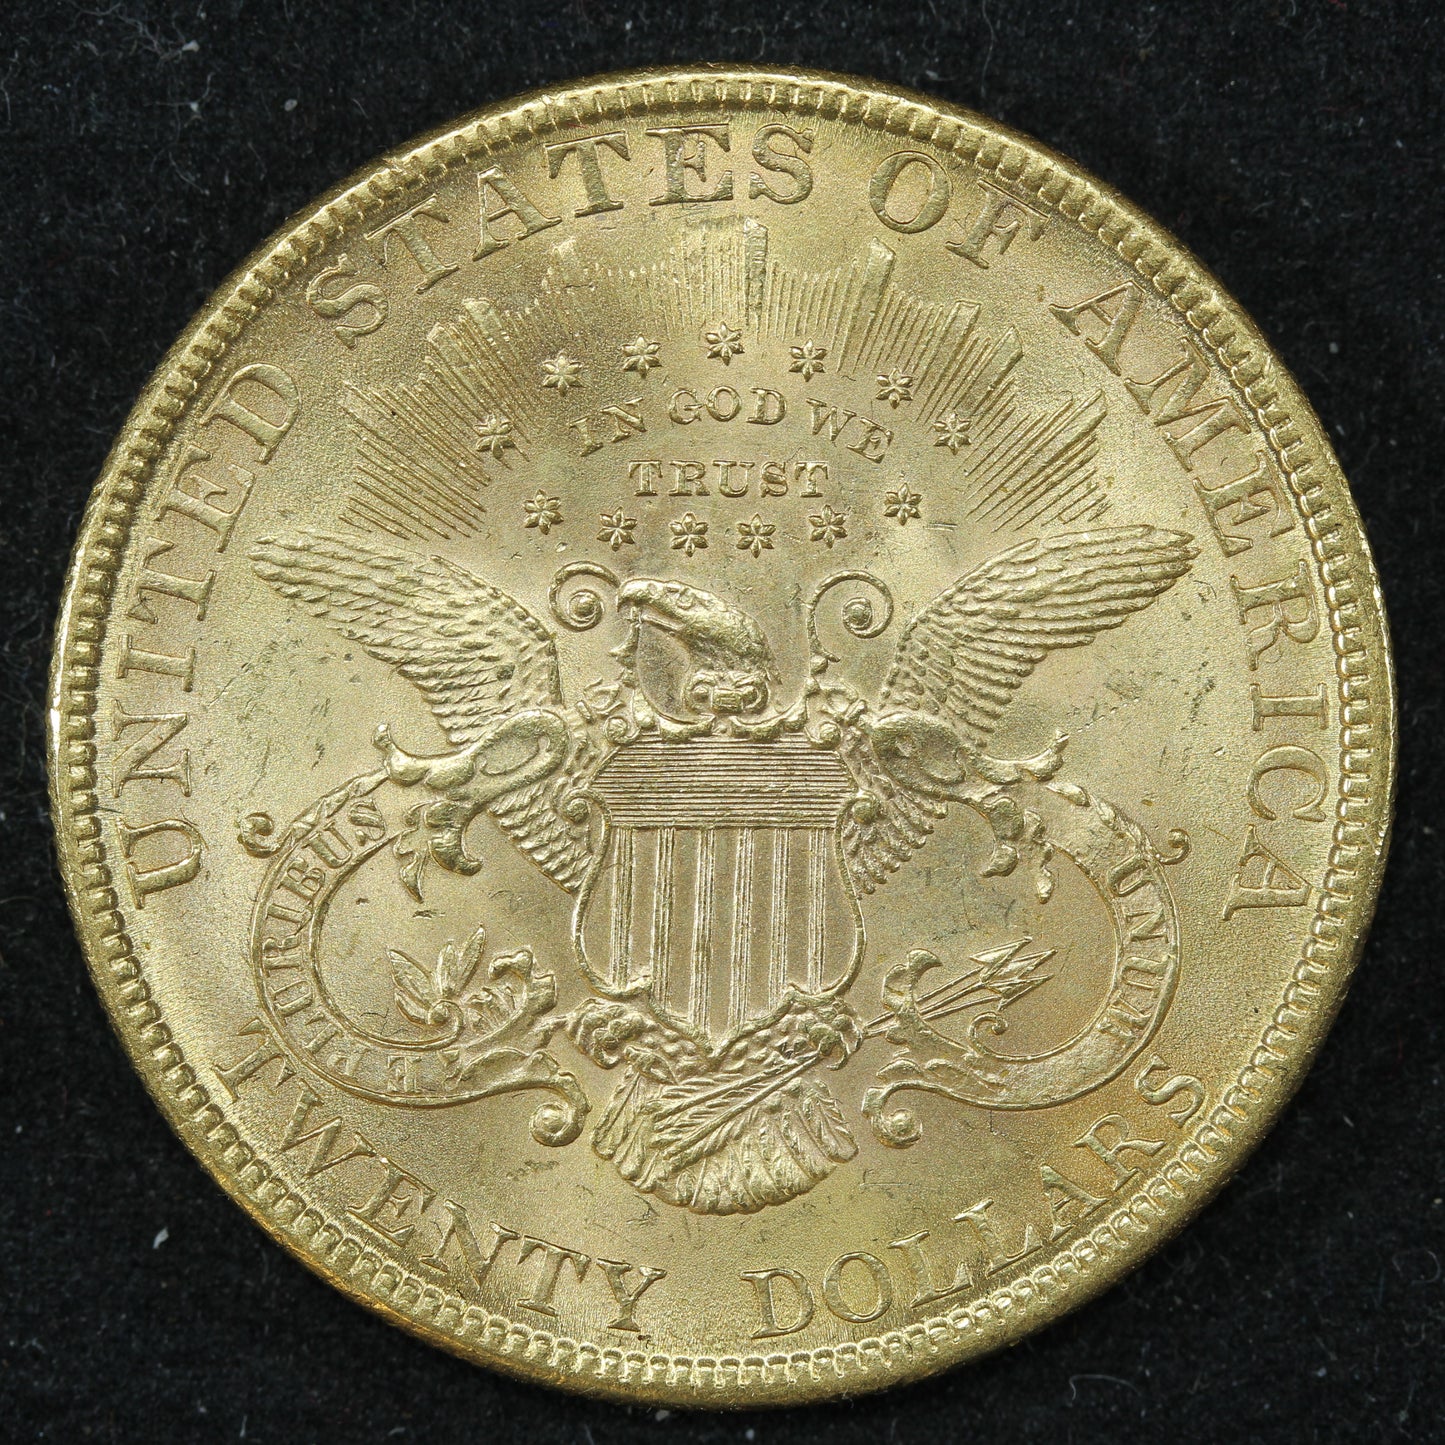 1895 (Philadelphia) Liberty Head $20 Dollar Gold Double Eagle Gold Coin